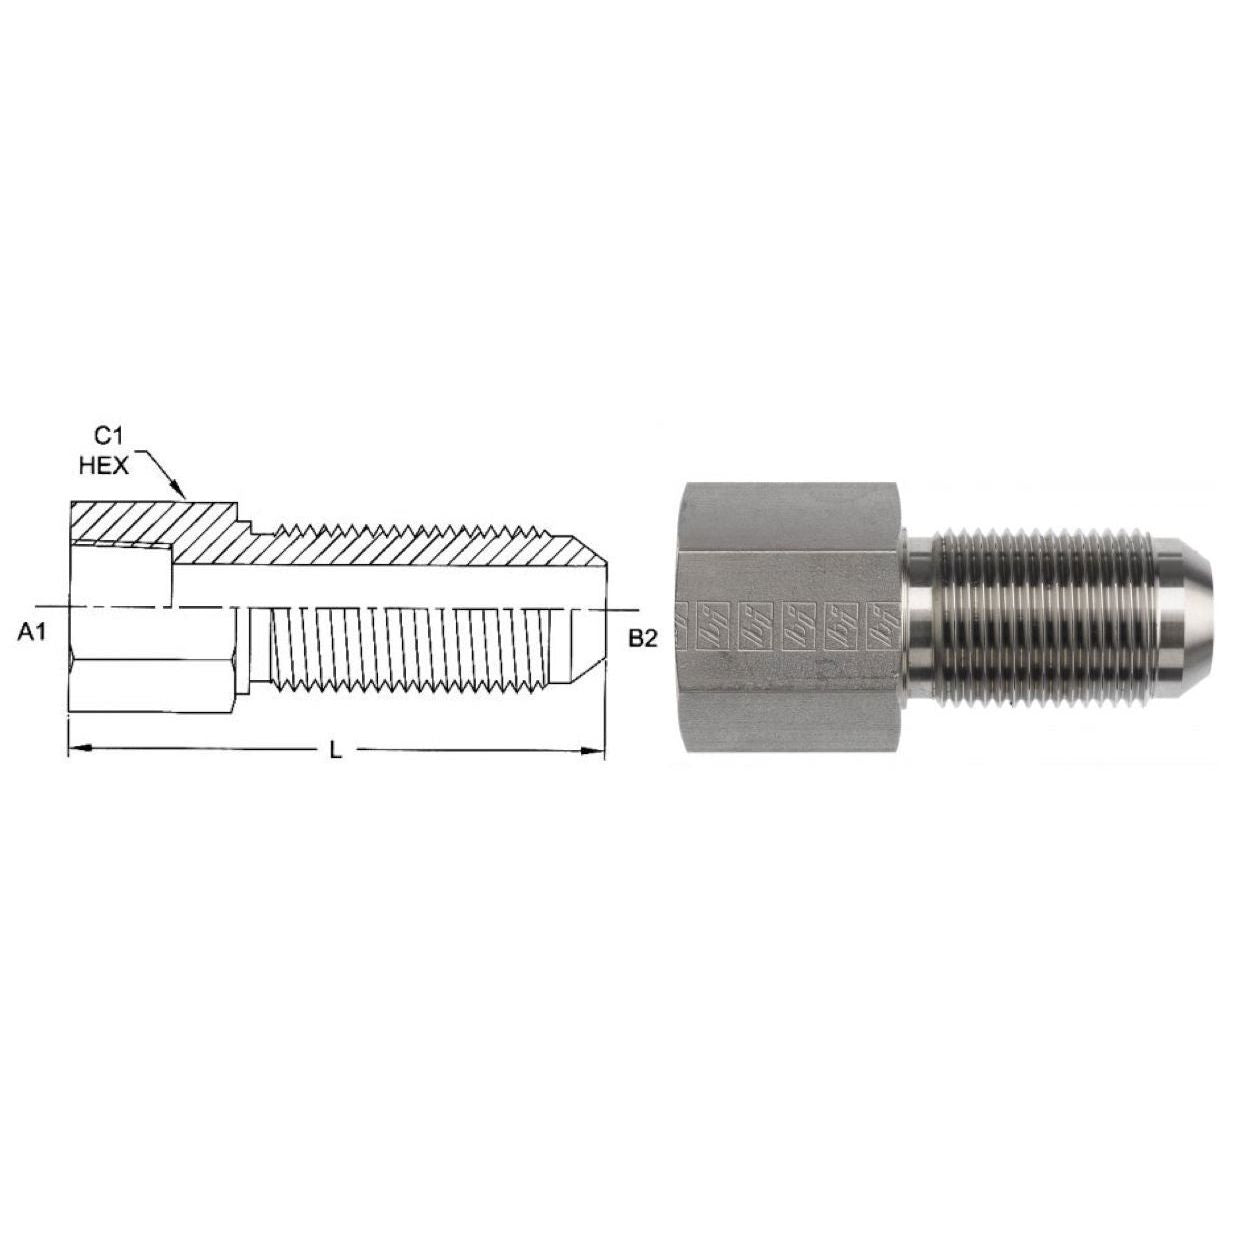 2705-12-12-SS : OneHydraulics Bulkhead Adapter, Straight, 0.75 (3/4") JIC JIC x 0.75 (3/4") Male, Stainless Steel, 4800psi